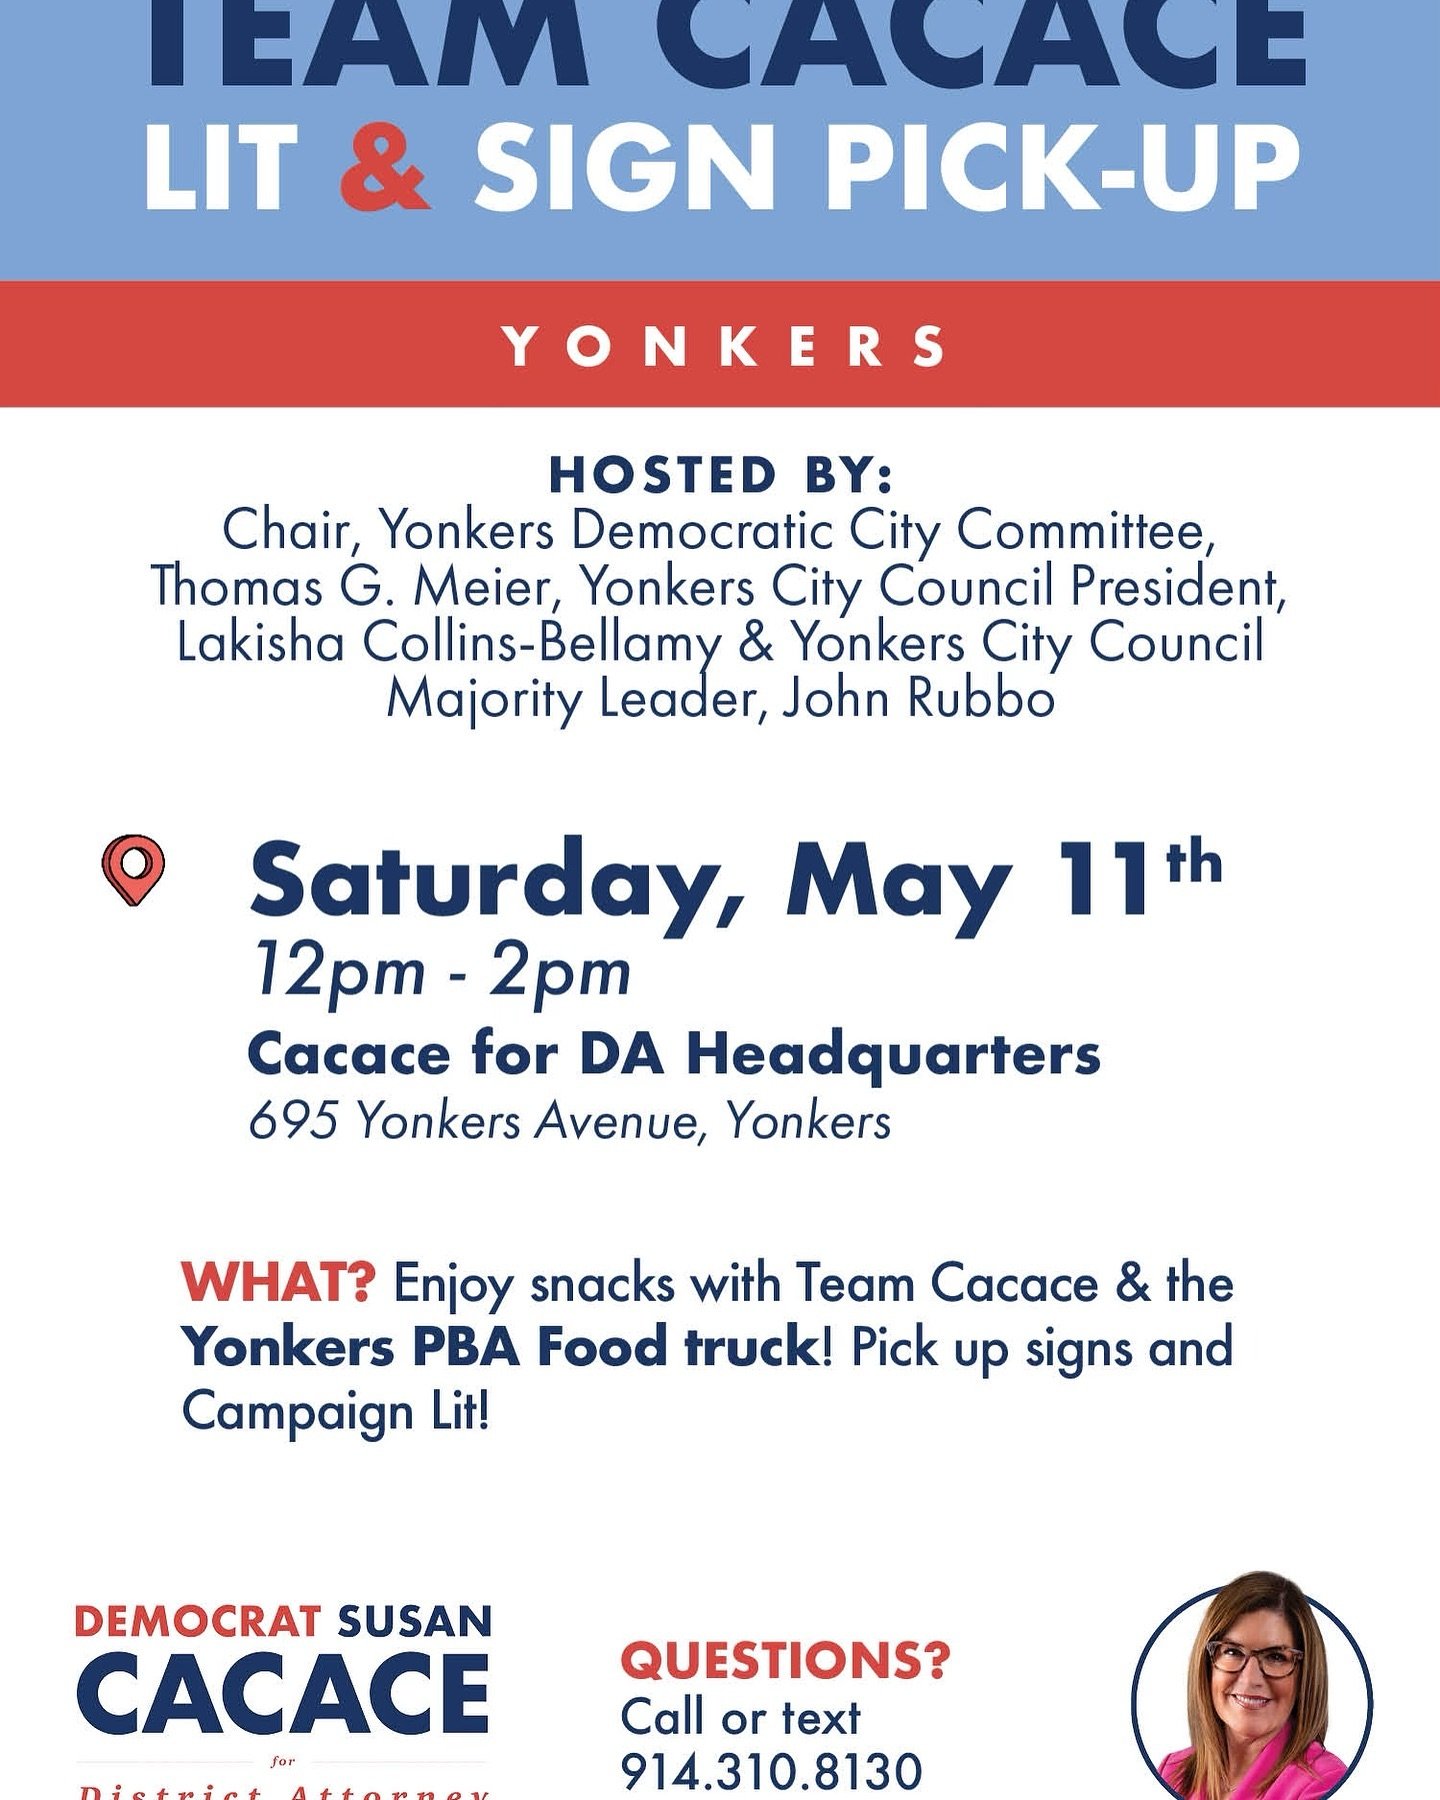 Let&rsquo;s gooooooo, #Yonkers!

See you Saturday! 🪧🪧🪧